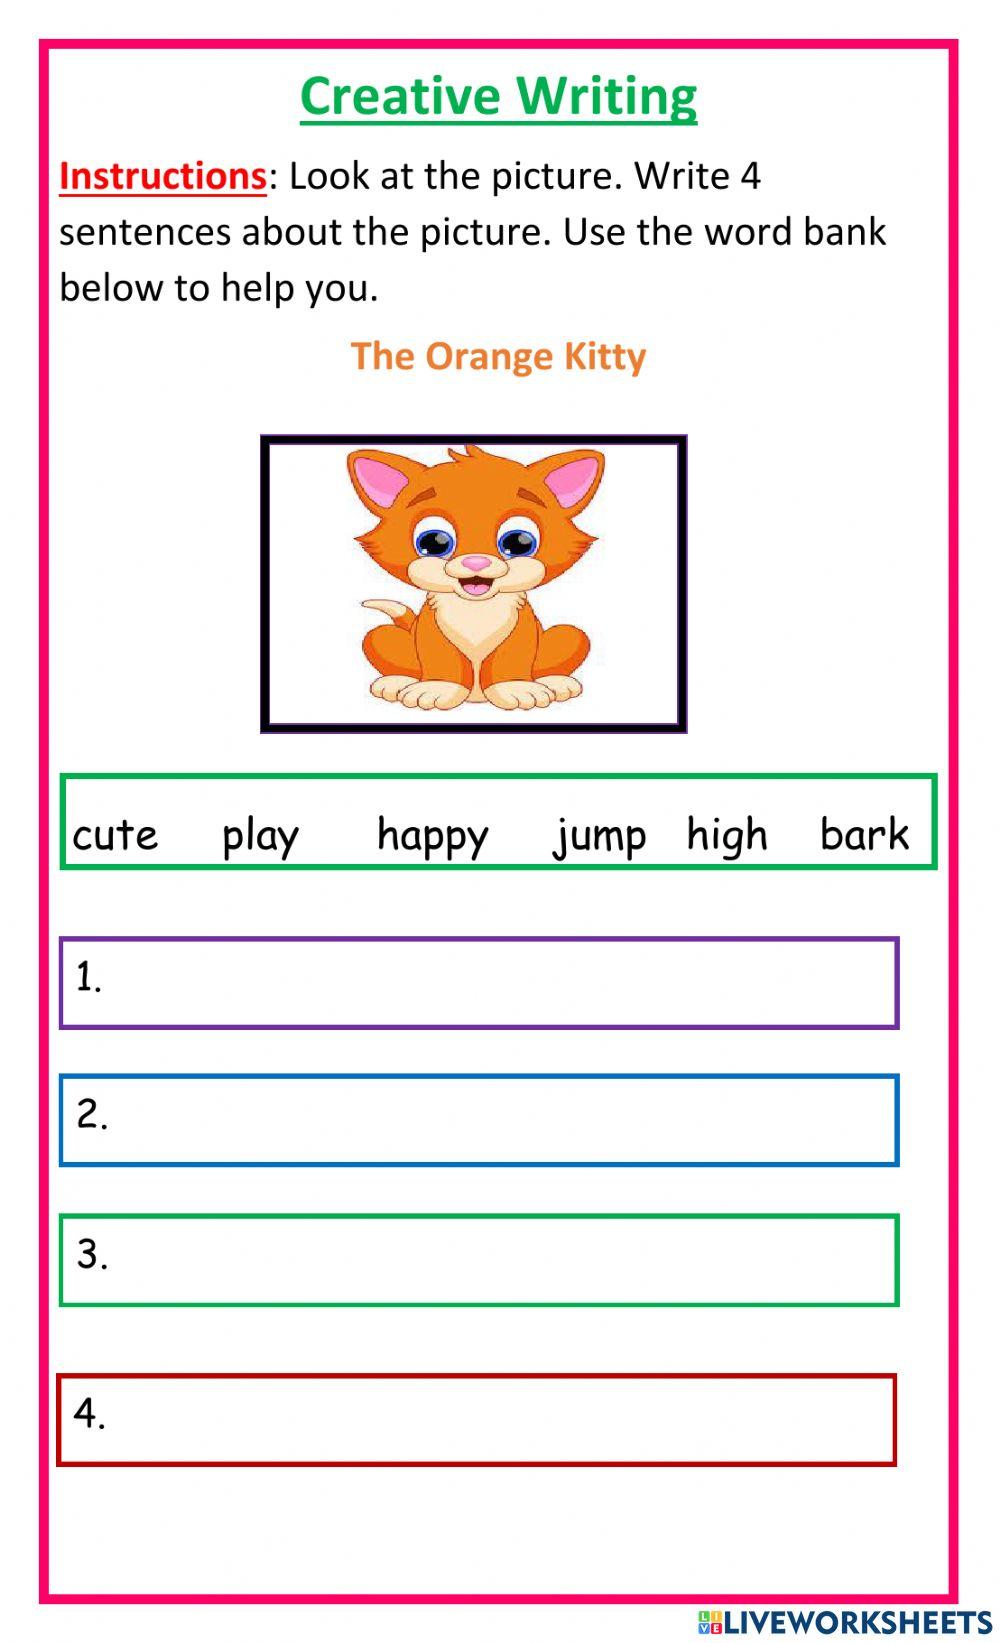 Creative Writing The Orange Kitty